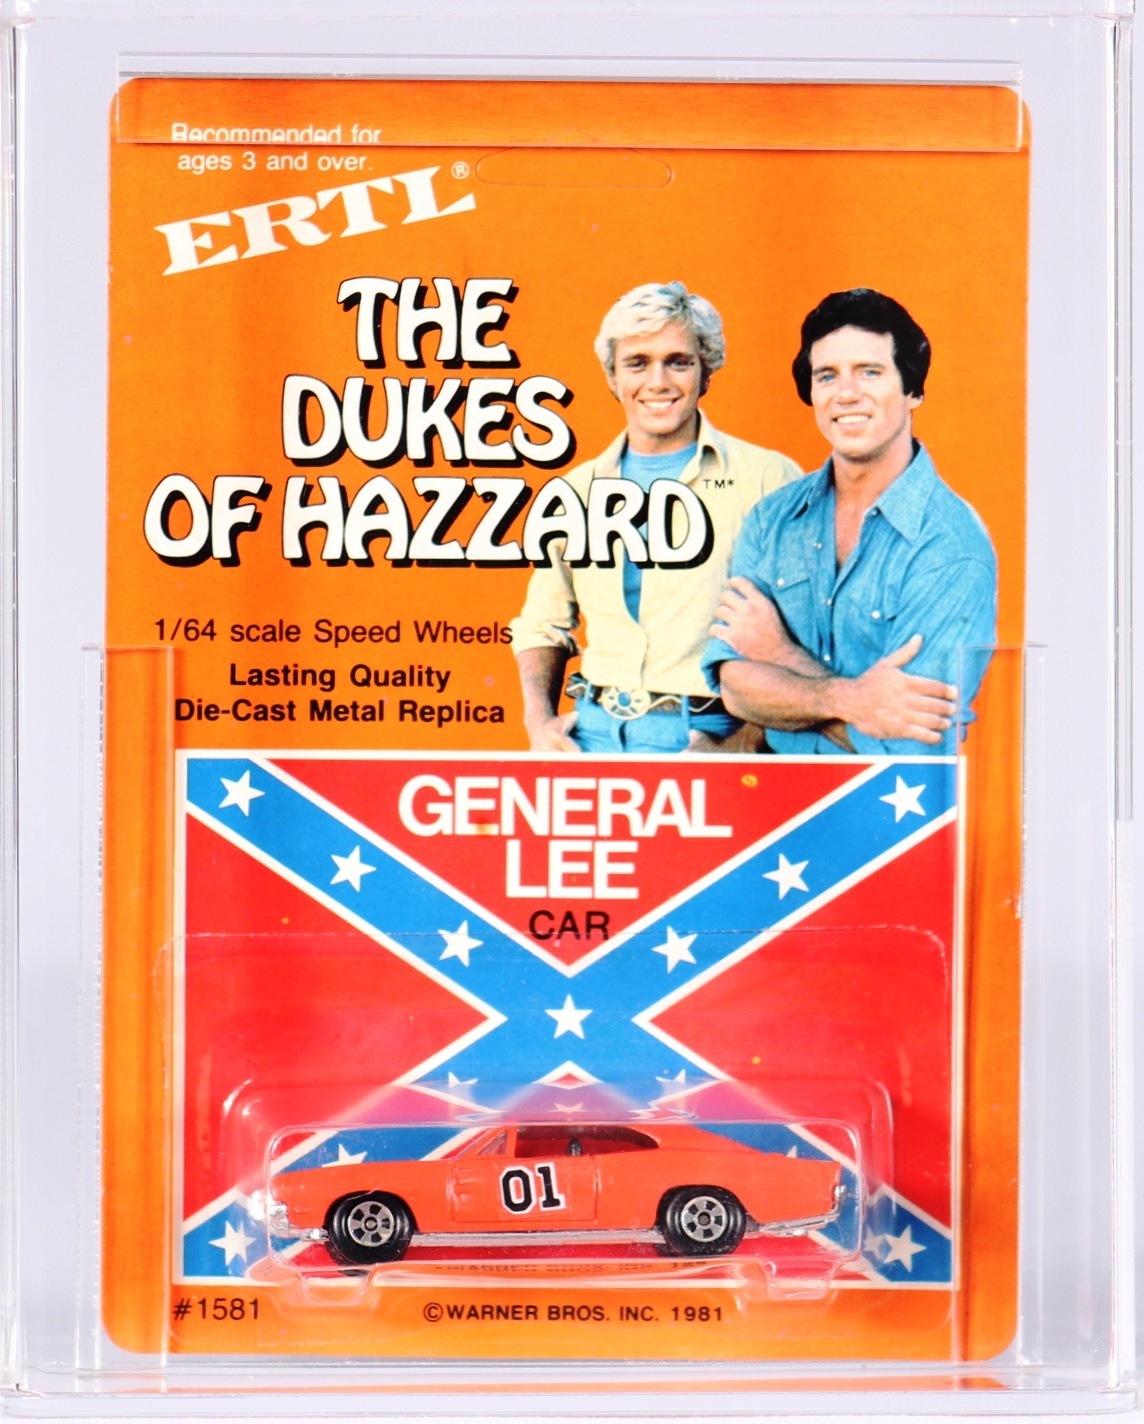 1981 ERTL Dukes of Hazzard Carded 1/64 Diecast - General Lee